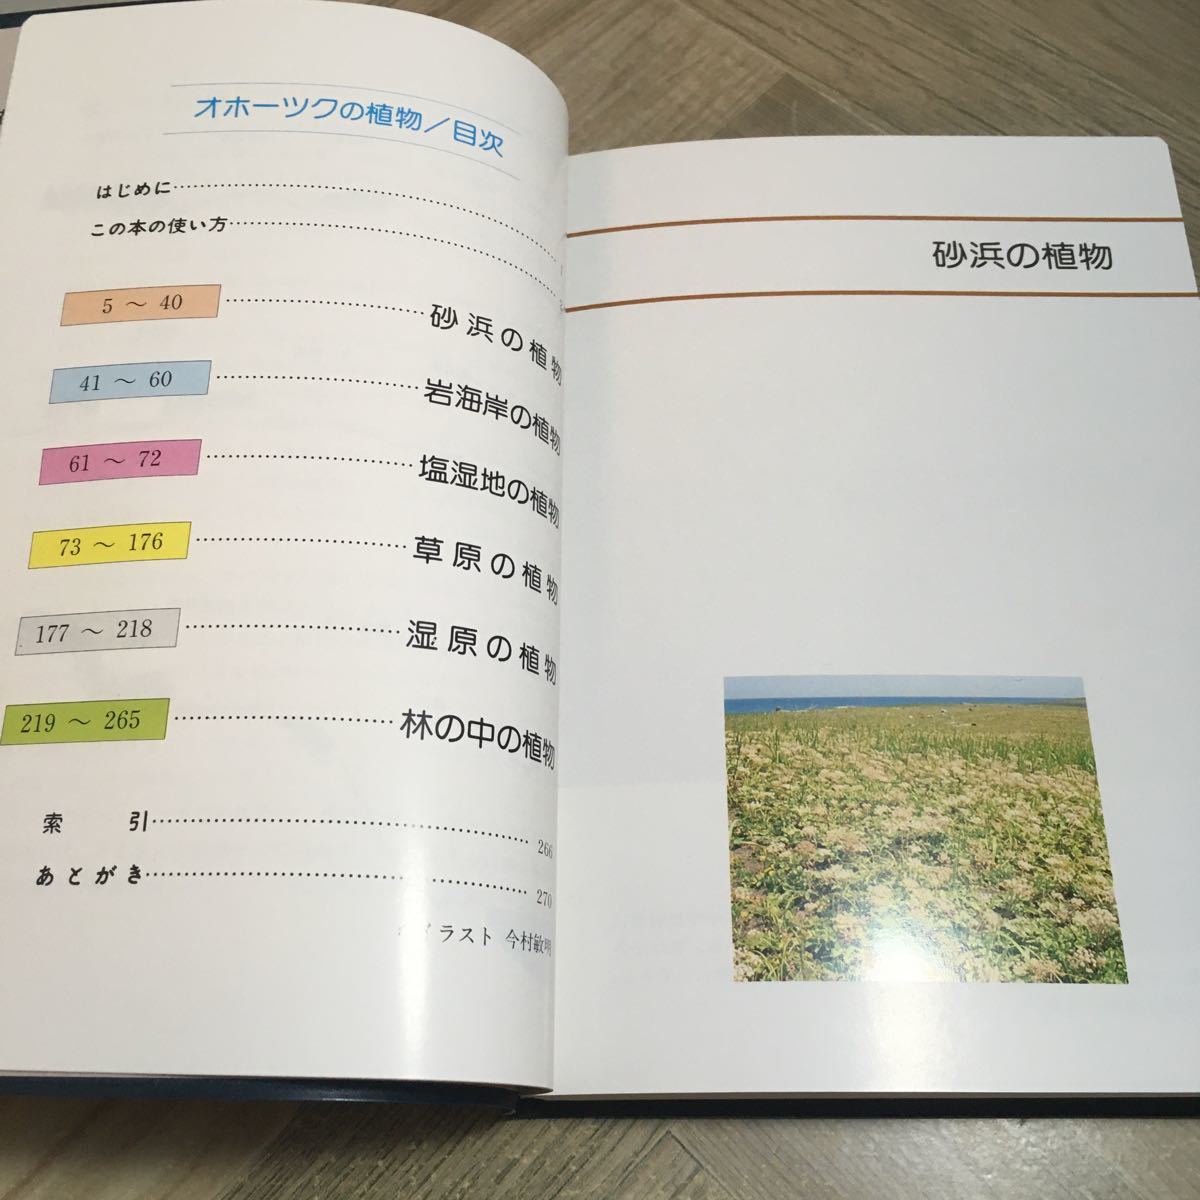 201s*o horn tsuk. plant west rice field ..... one Hokkaido newspaper company Showa era 58 year sea . plant plant illustrated reference book 